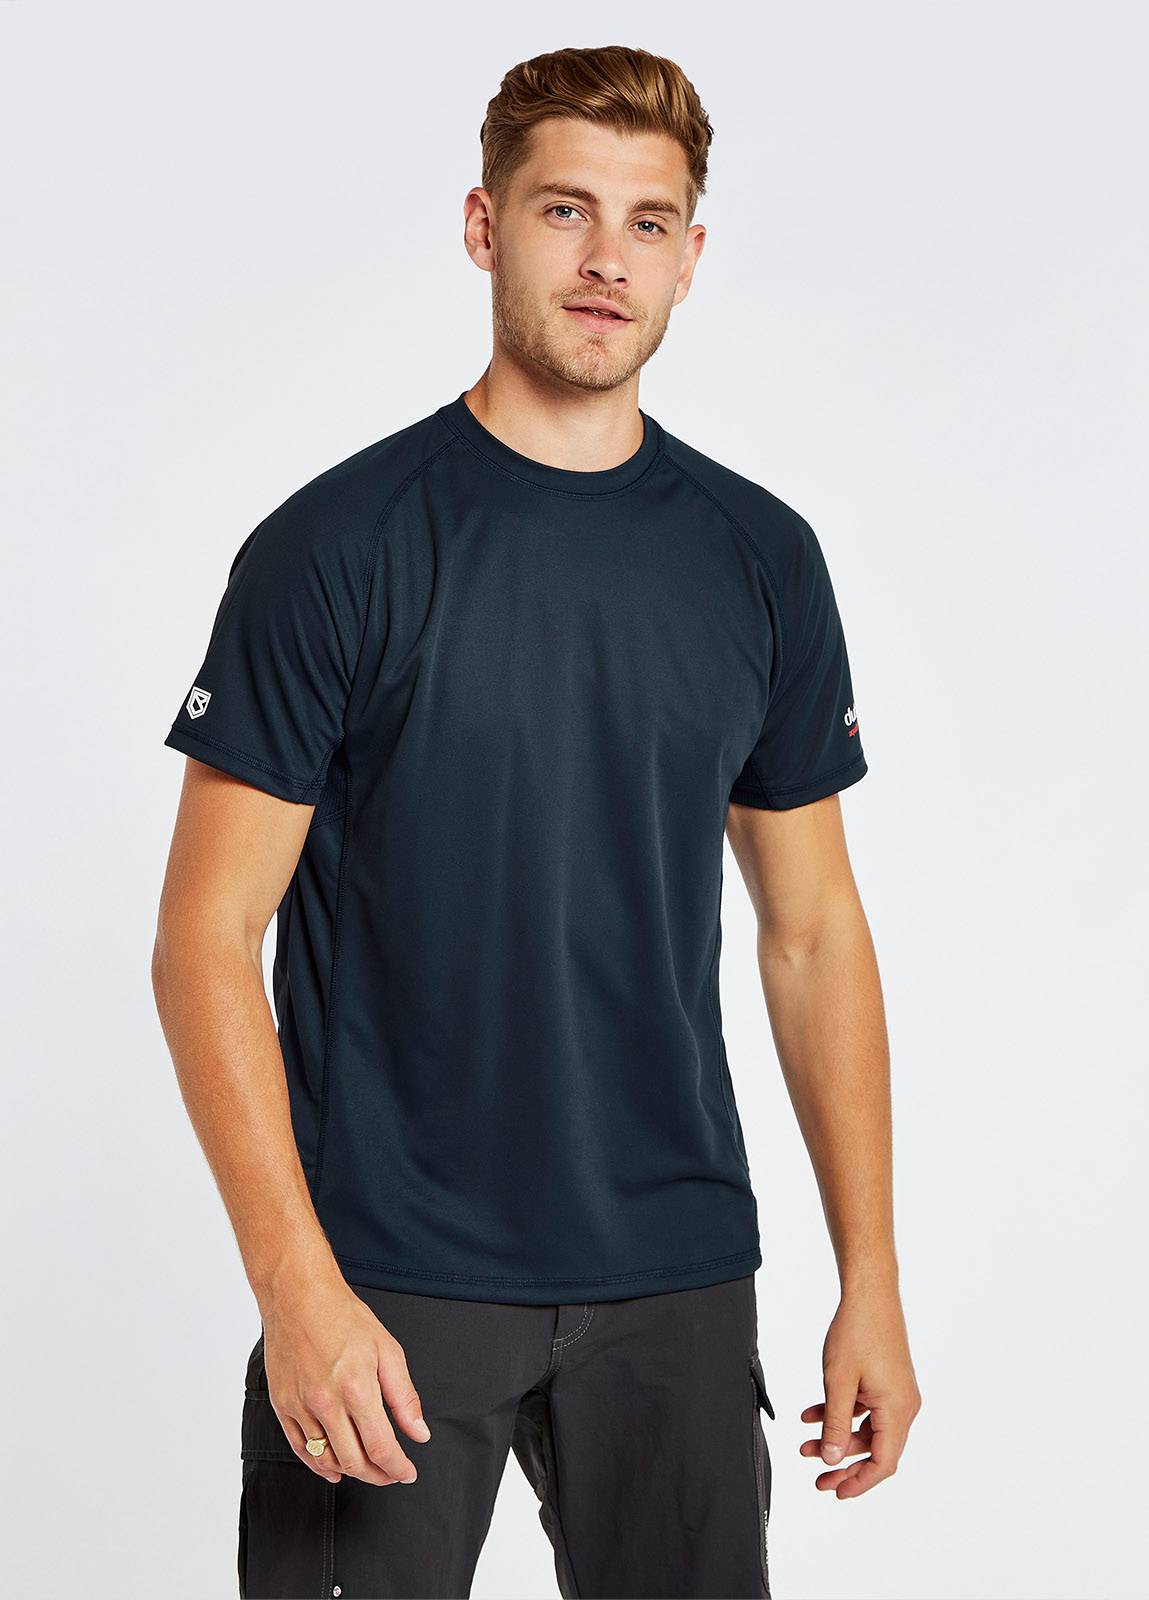 Tangier Herren Kurzarm-T-Shirt - Navy